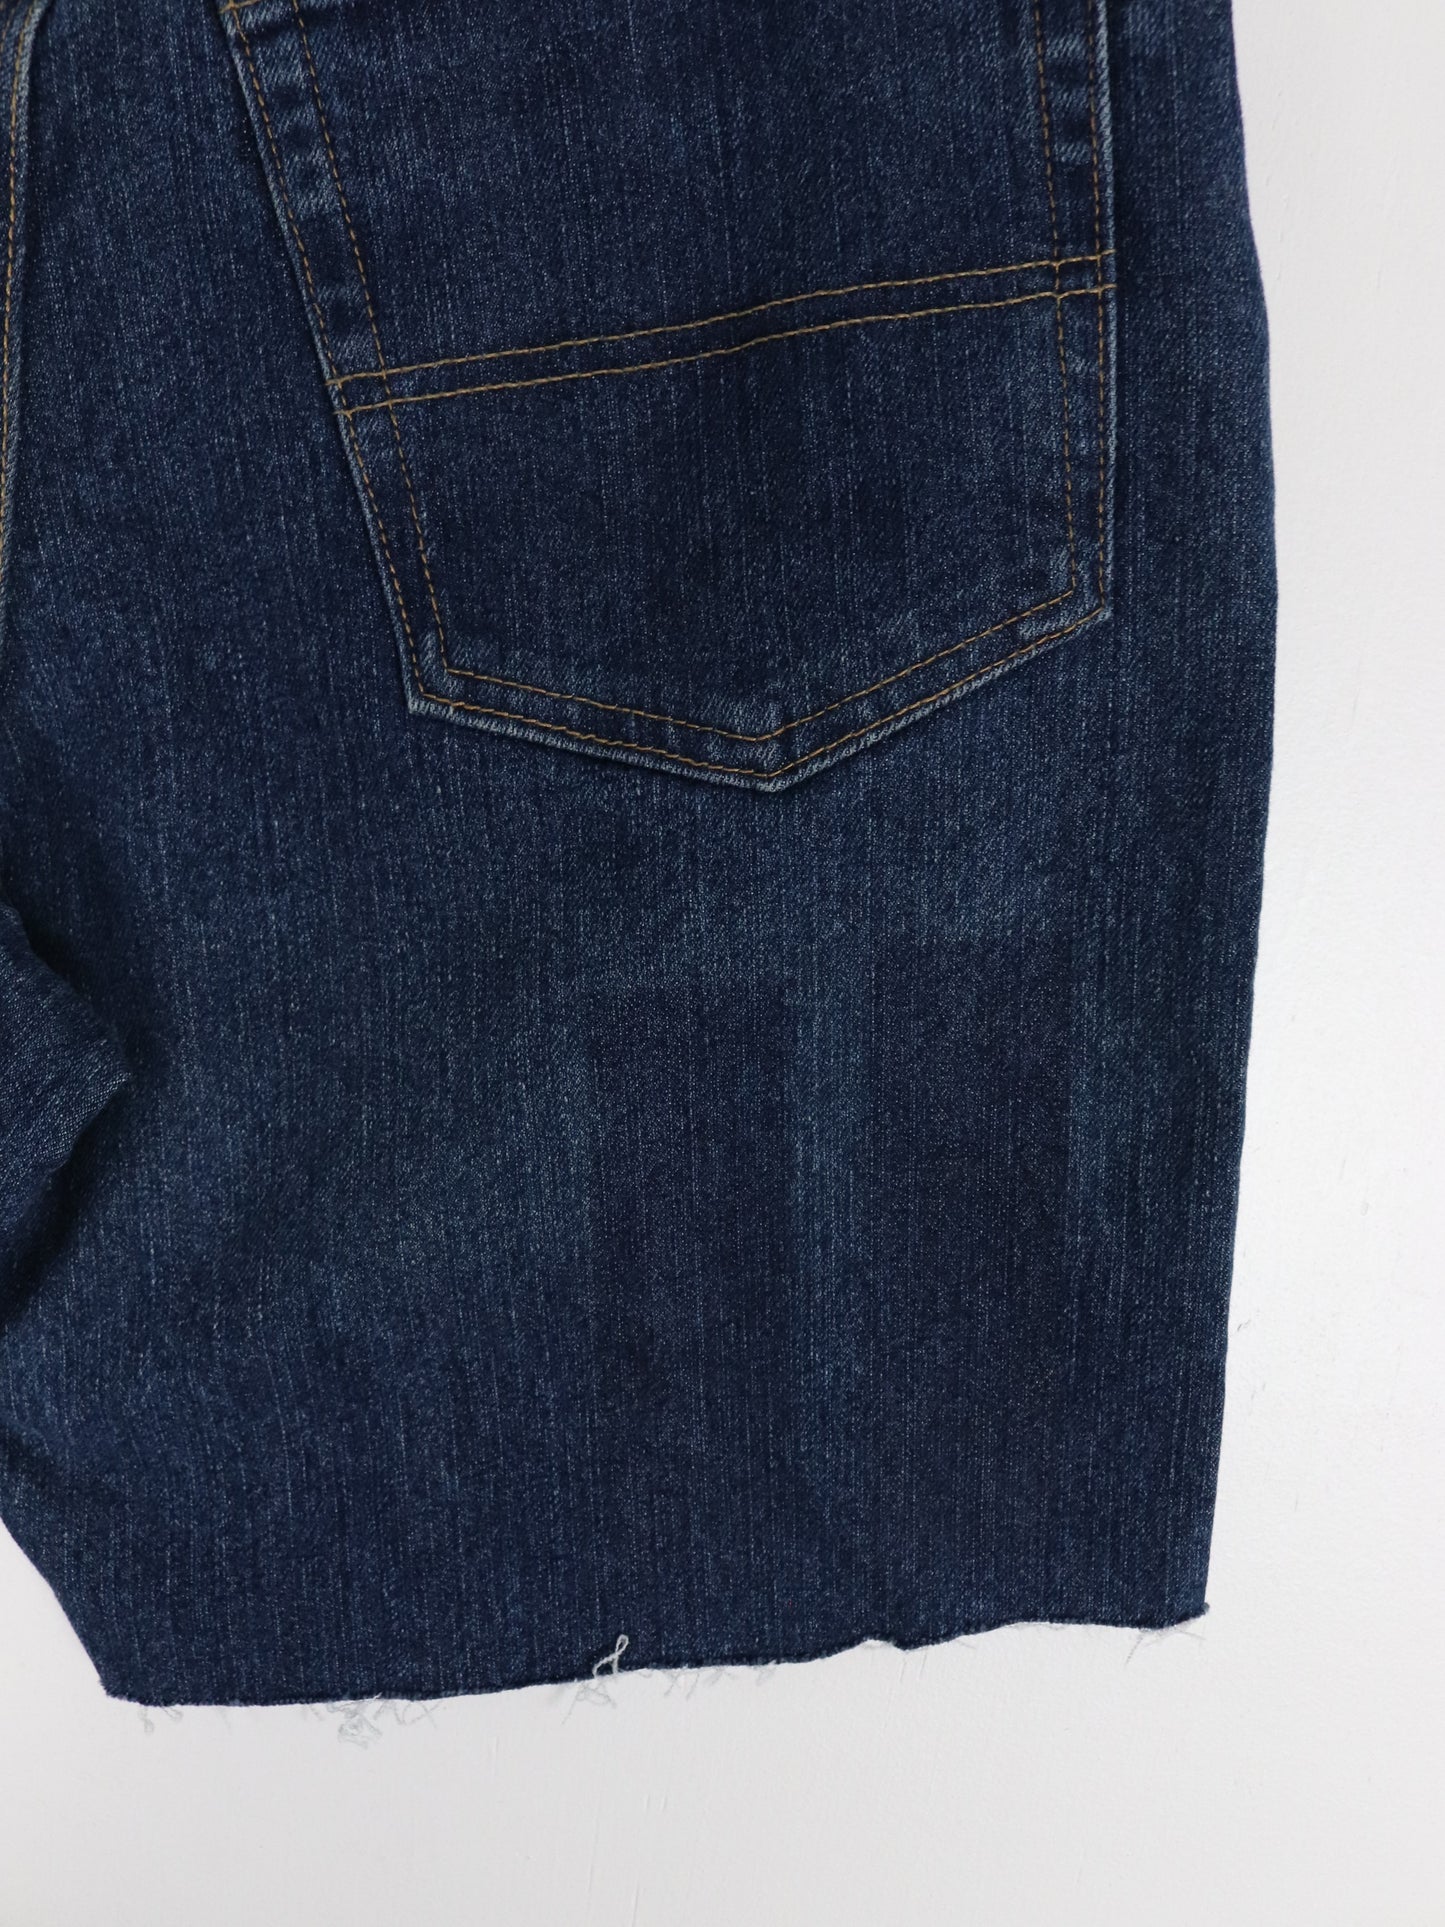 Wrangler Riggs Work Wear Shorts Fits Mens 31 Blue Denim Jorts Cut Off